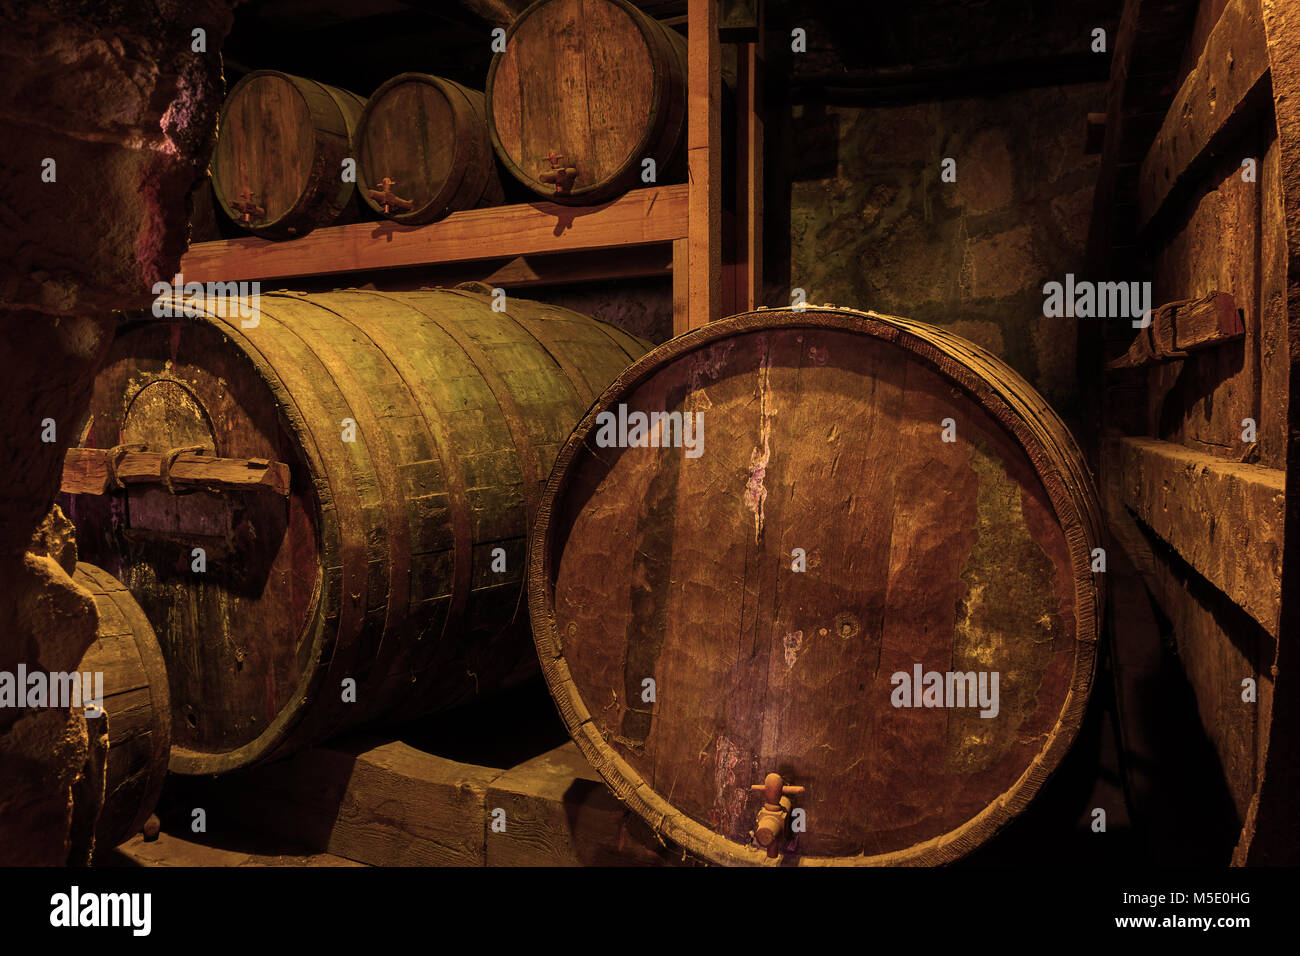 Old wooden wine barrels in cellar Stock Photo